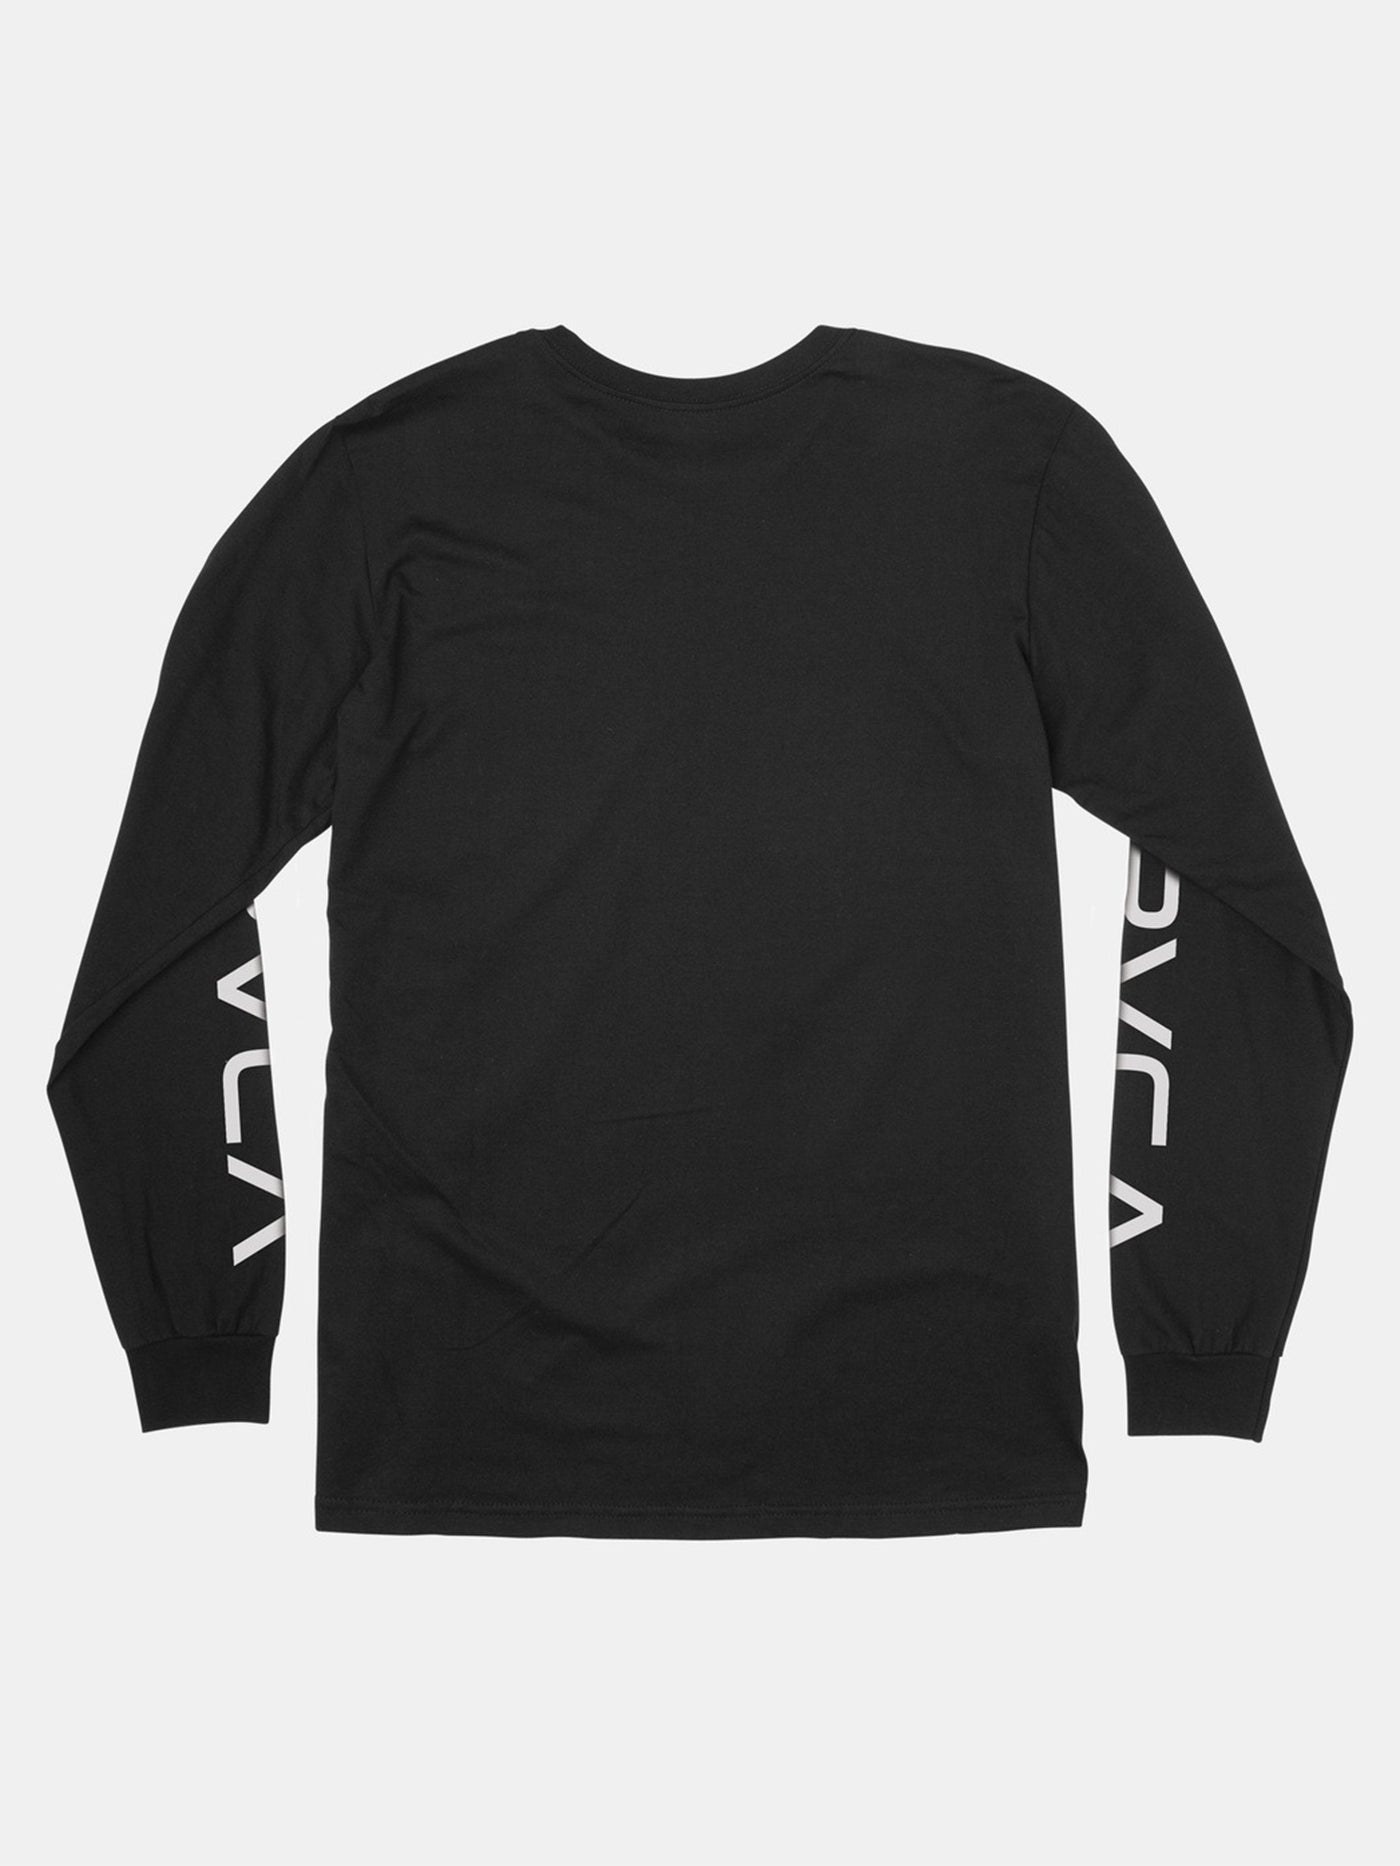 RVCA Va Rvca 2x Long Sleeve T-Shirt